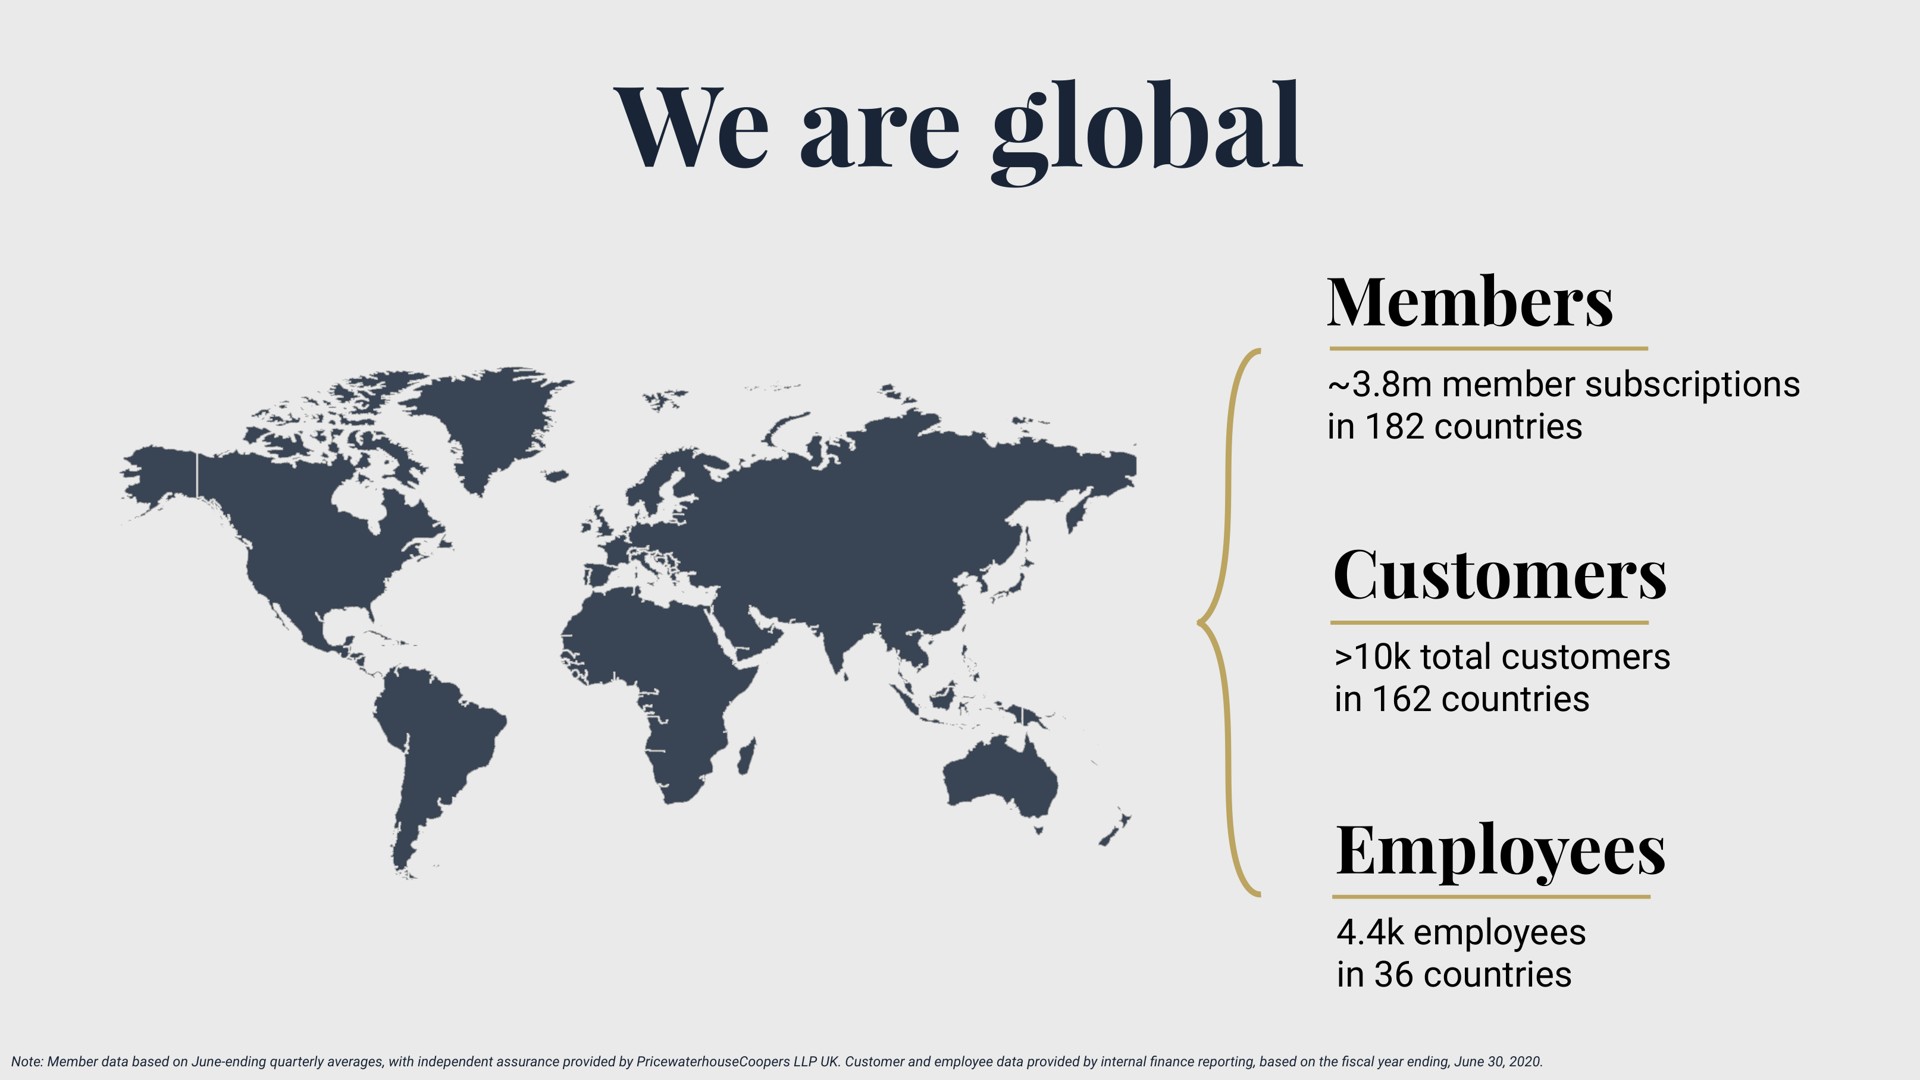 we are global members member subscriptions in countries customers total customers in countries employees employees in countries | Dow Jones